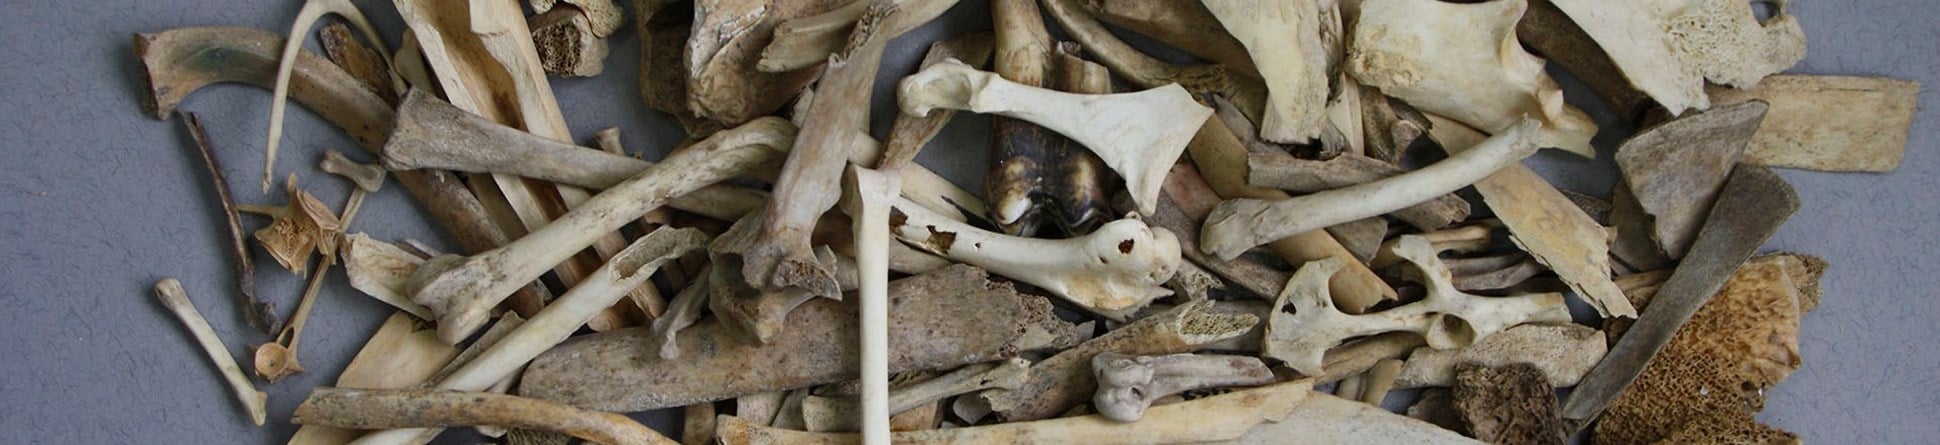 photograph of archaeological animal bones